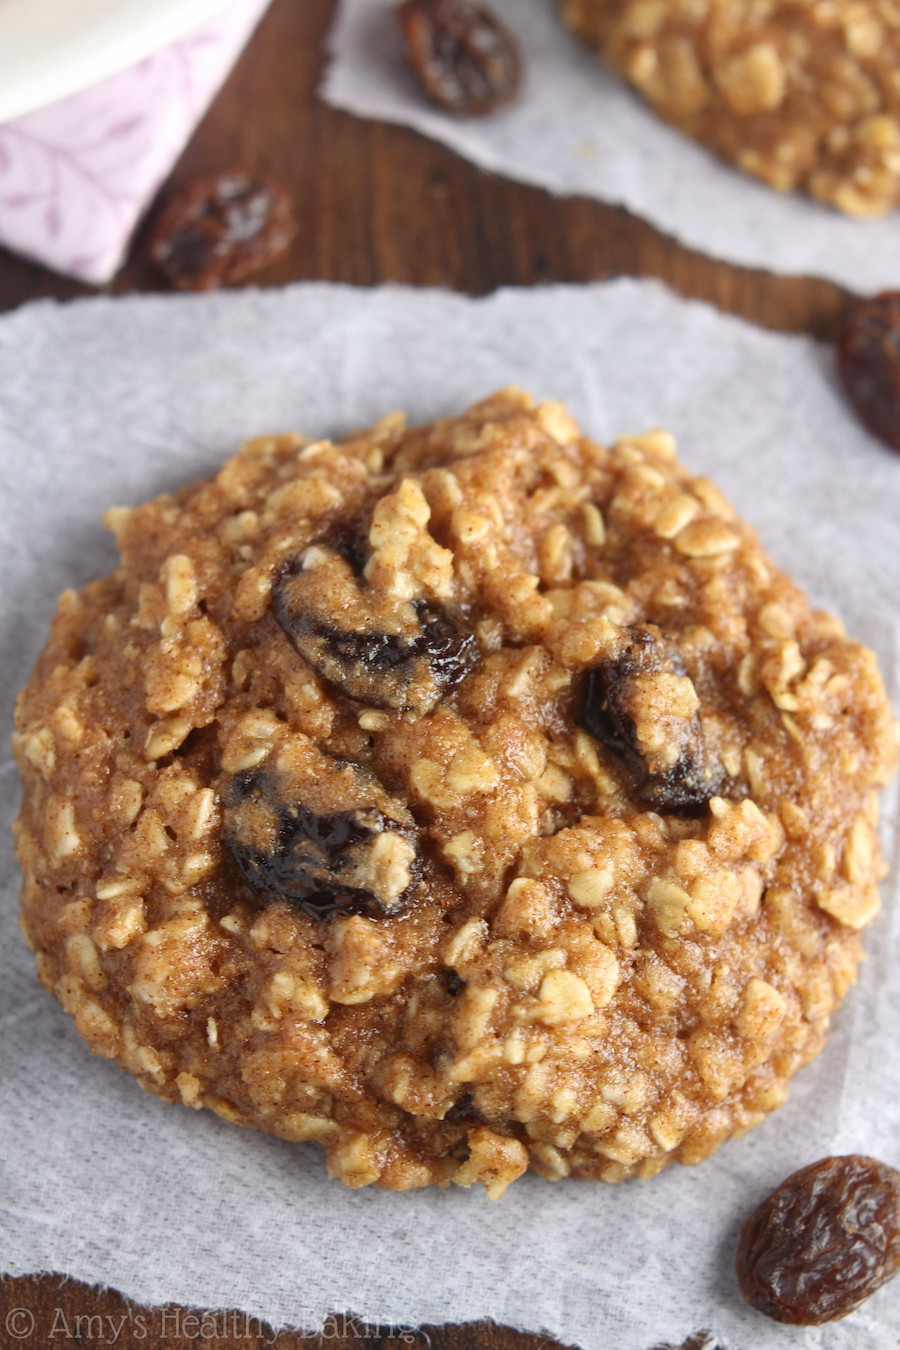 Oatmeal Raisin Cookies Recipe
 The Ultimate Healthy Soft & Chewy Oatmeal Raisin Cookies